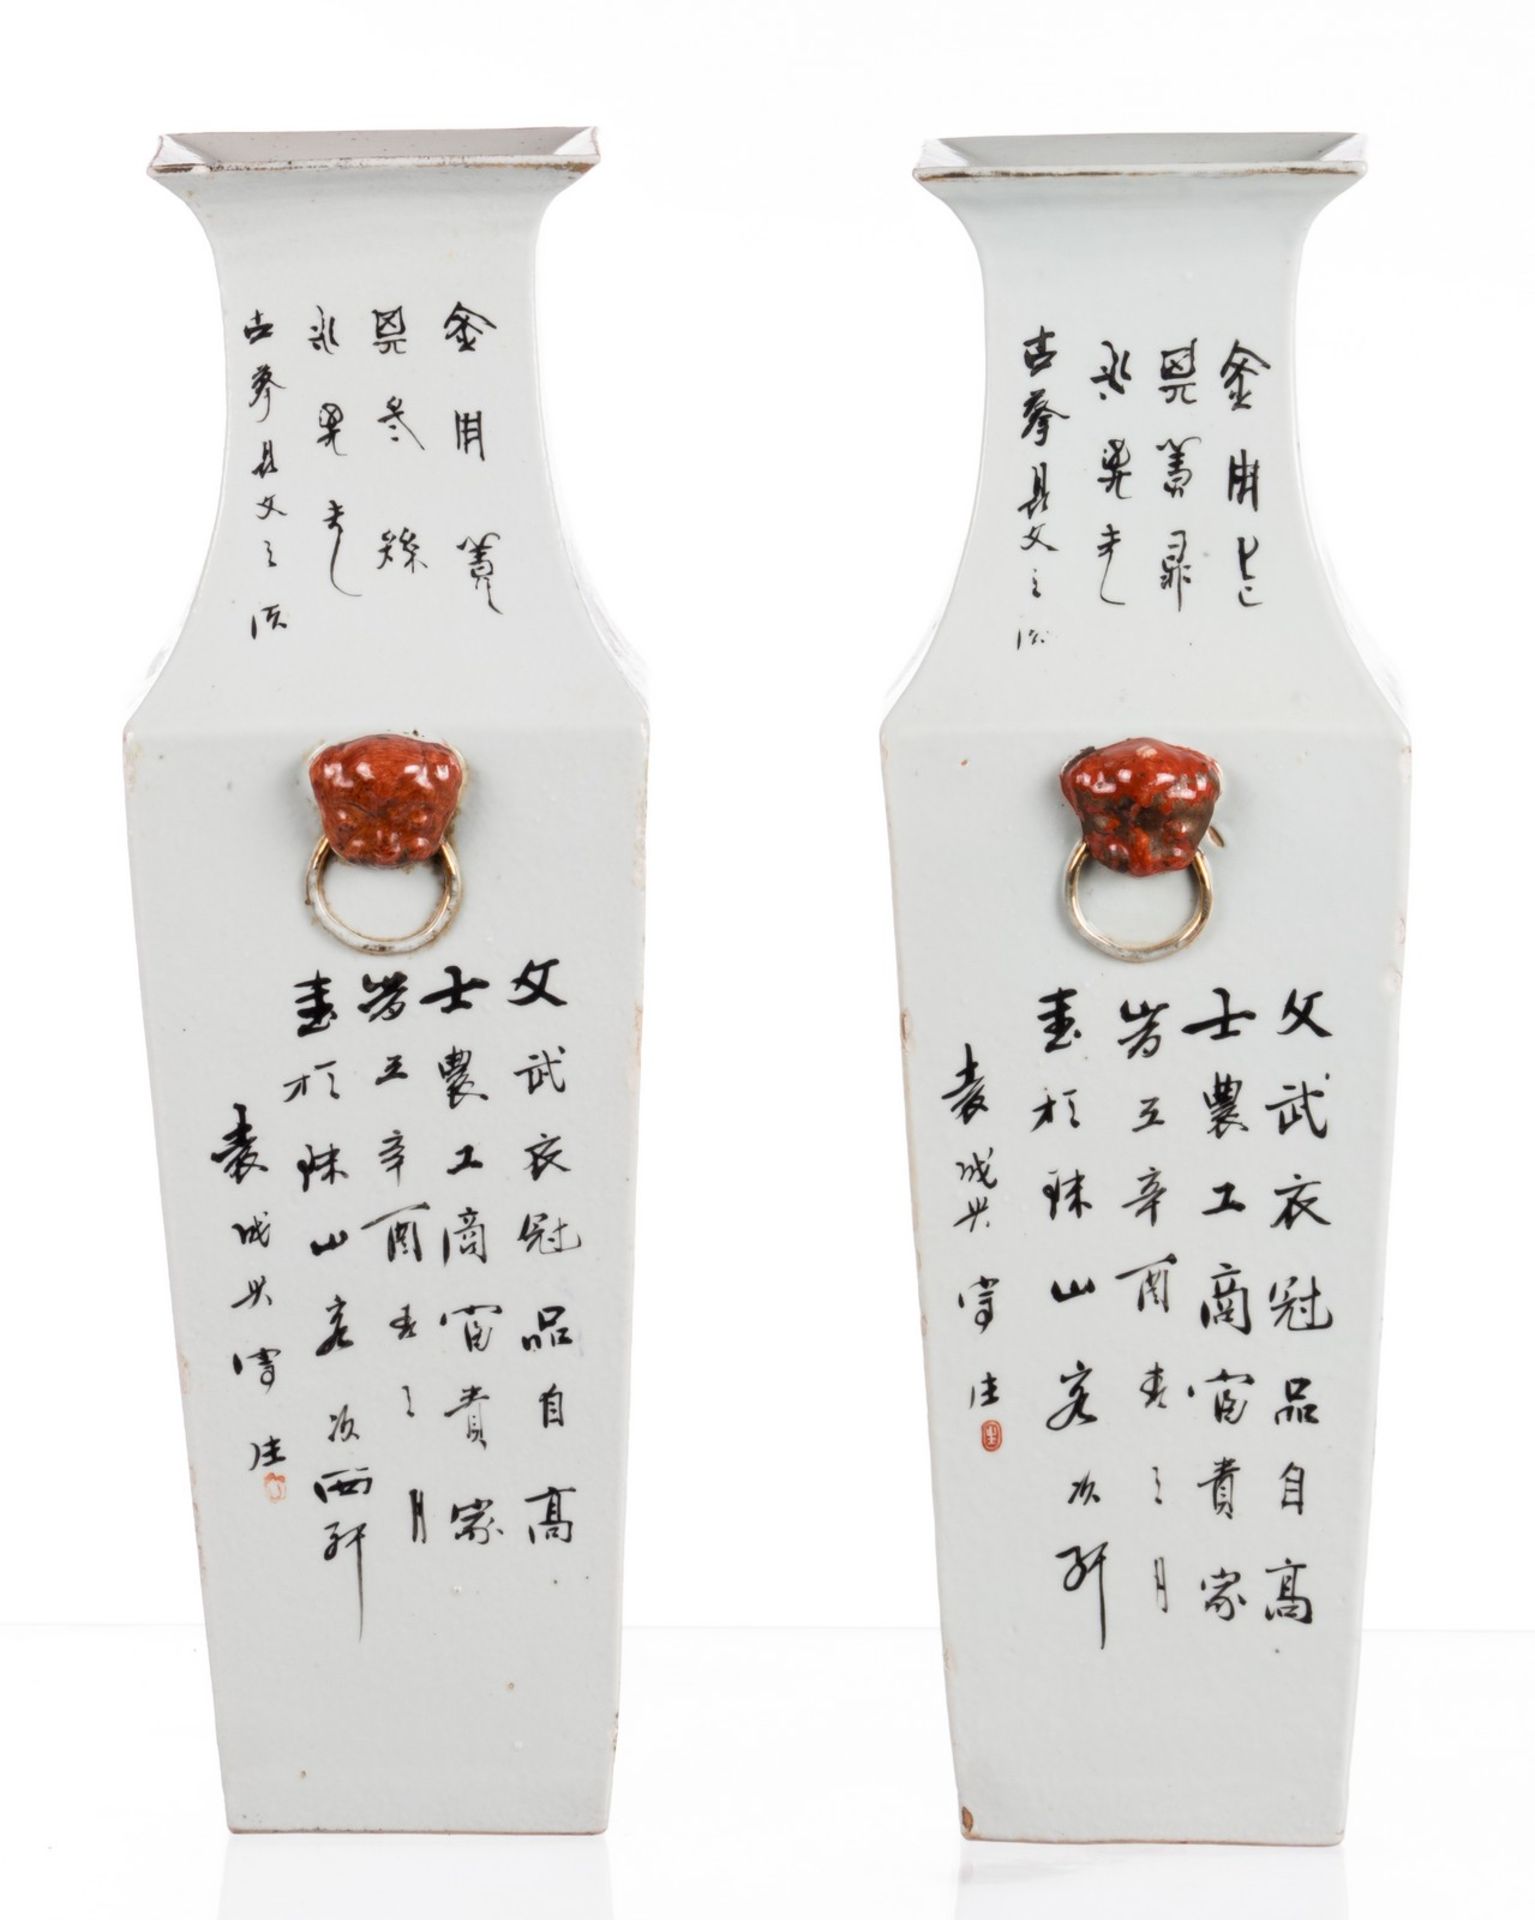 Two quadrangular vases, China, polychrome decorated with fishermen, literati and calligraphic texts, - Image 2 of 18